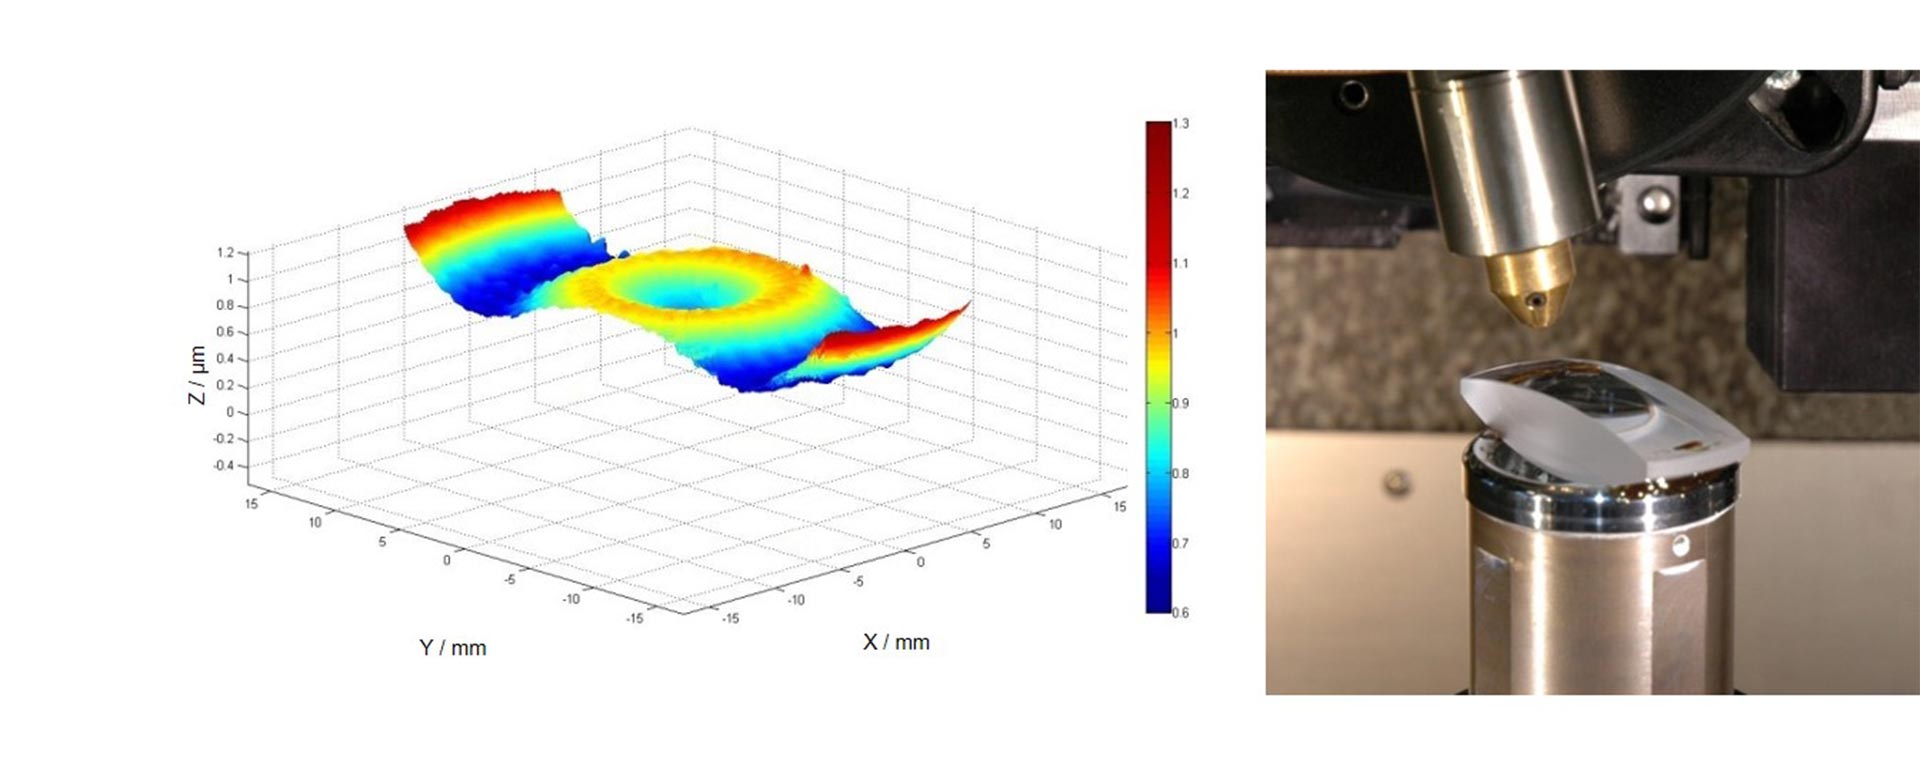 AMETEK Luphos interferometer scan test pieces using four wavelengths